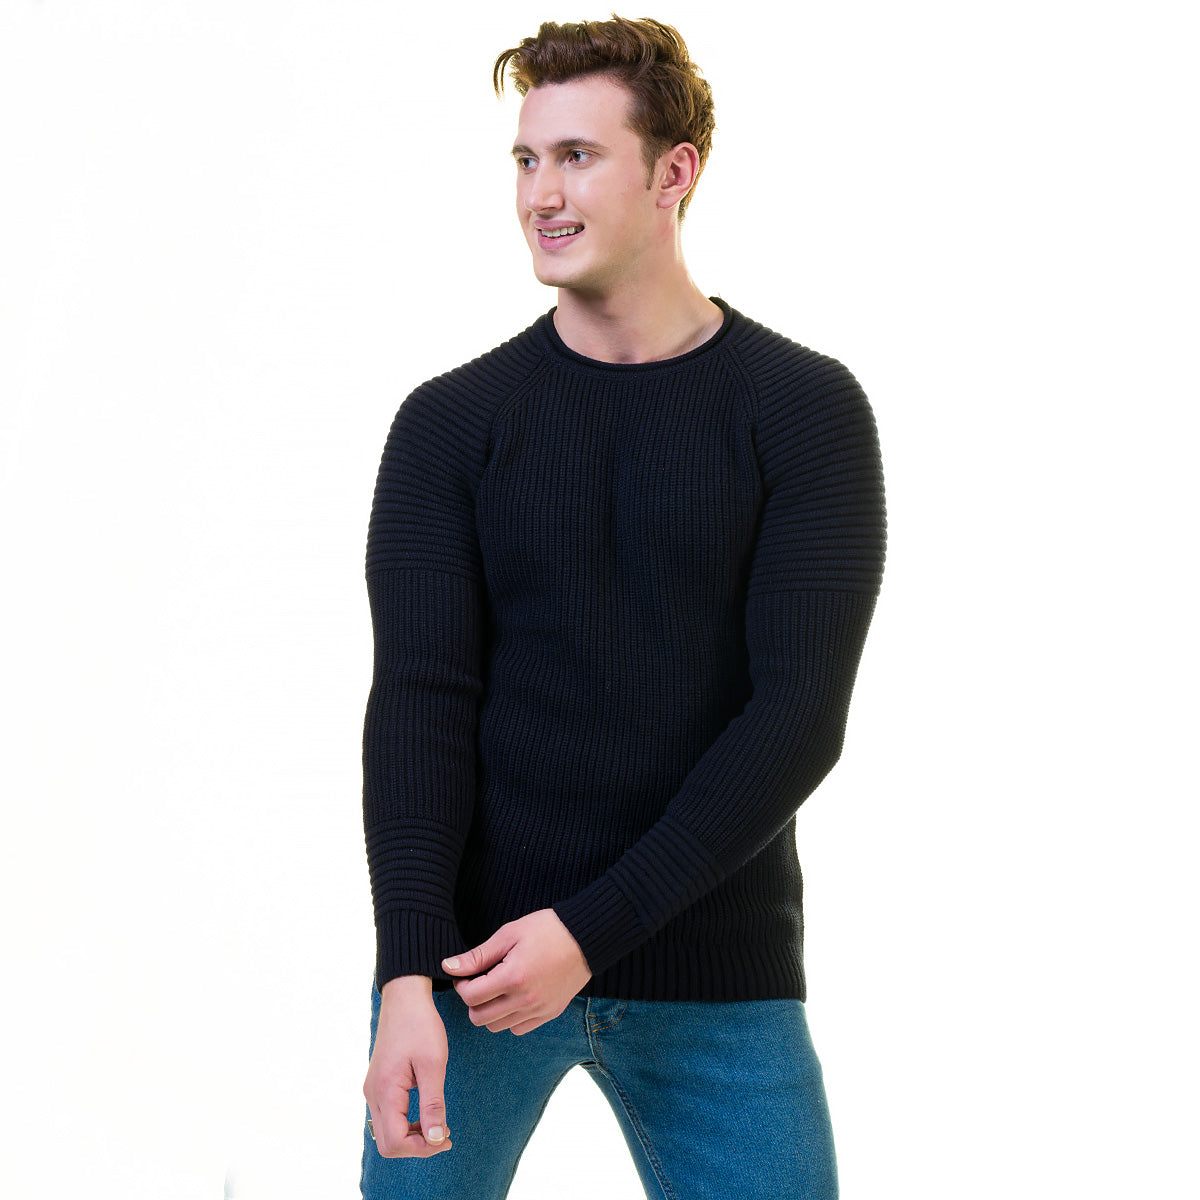 Black Plain European Wool Luxury Zippered With Sweater Jacket Warm Winter Tailor Fit